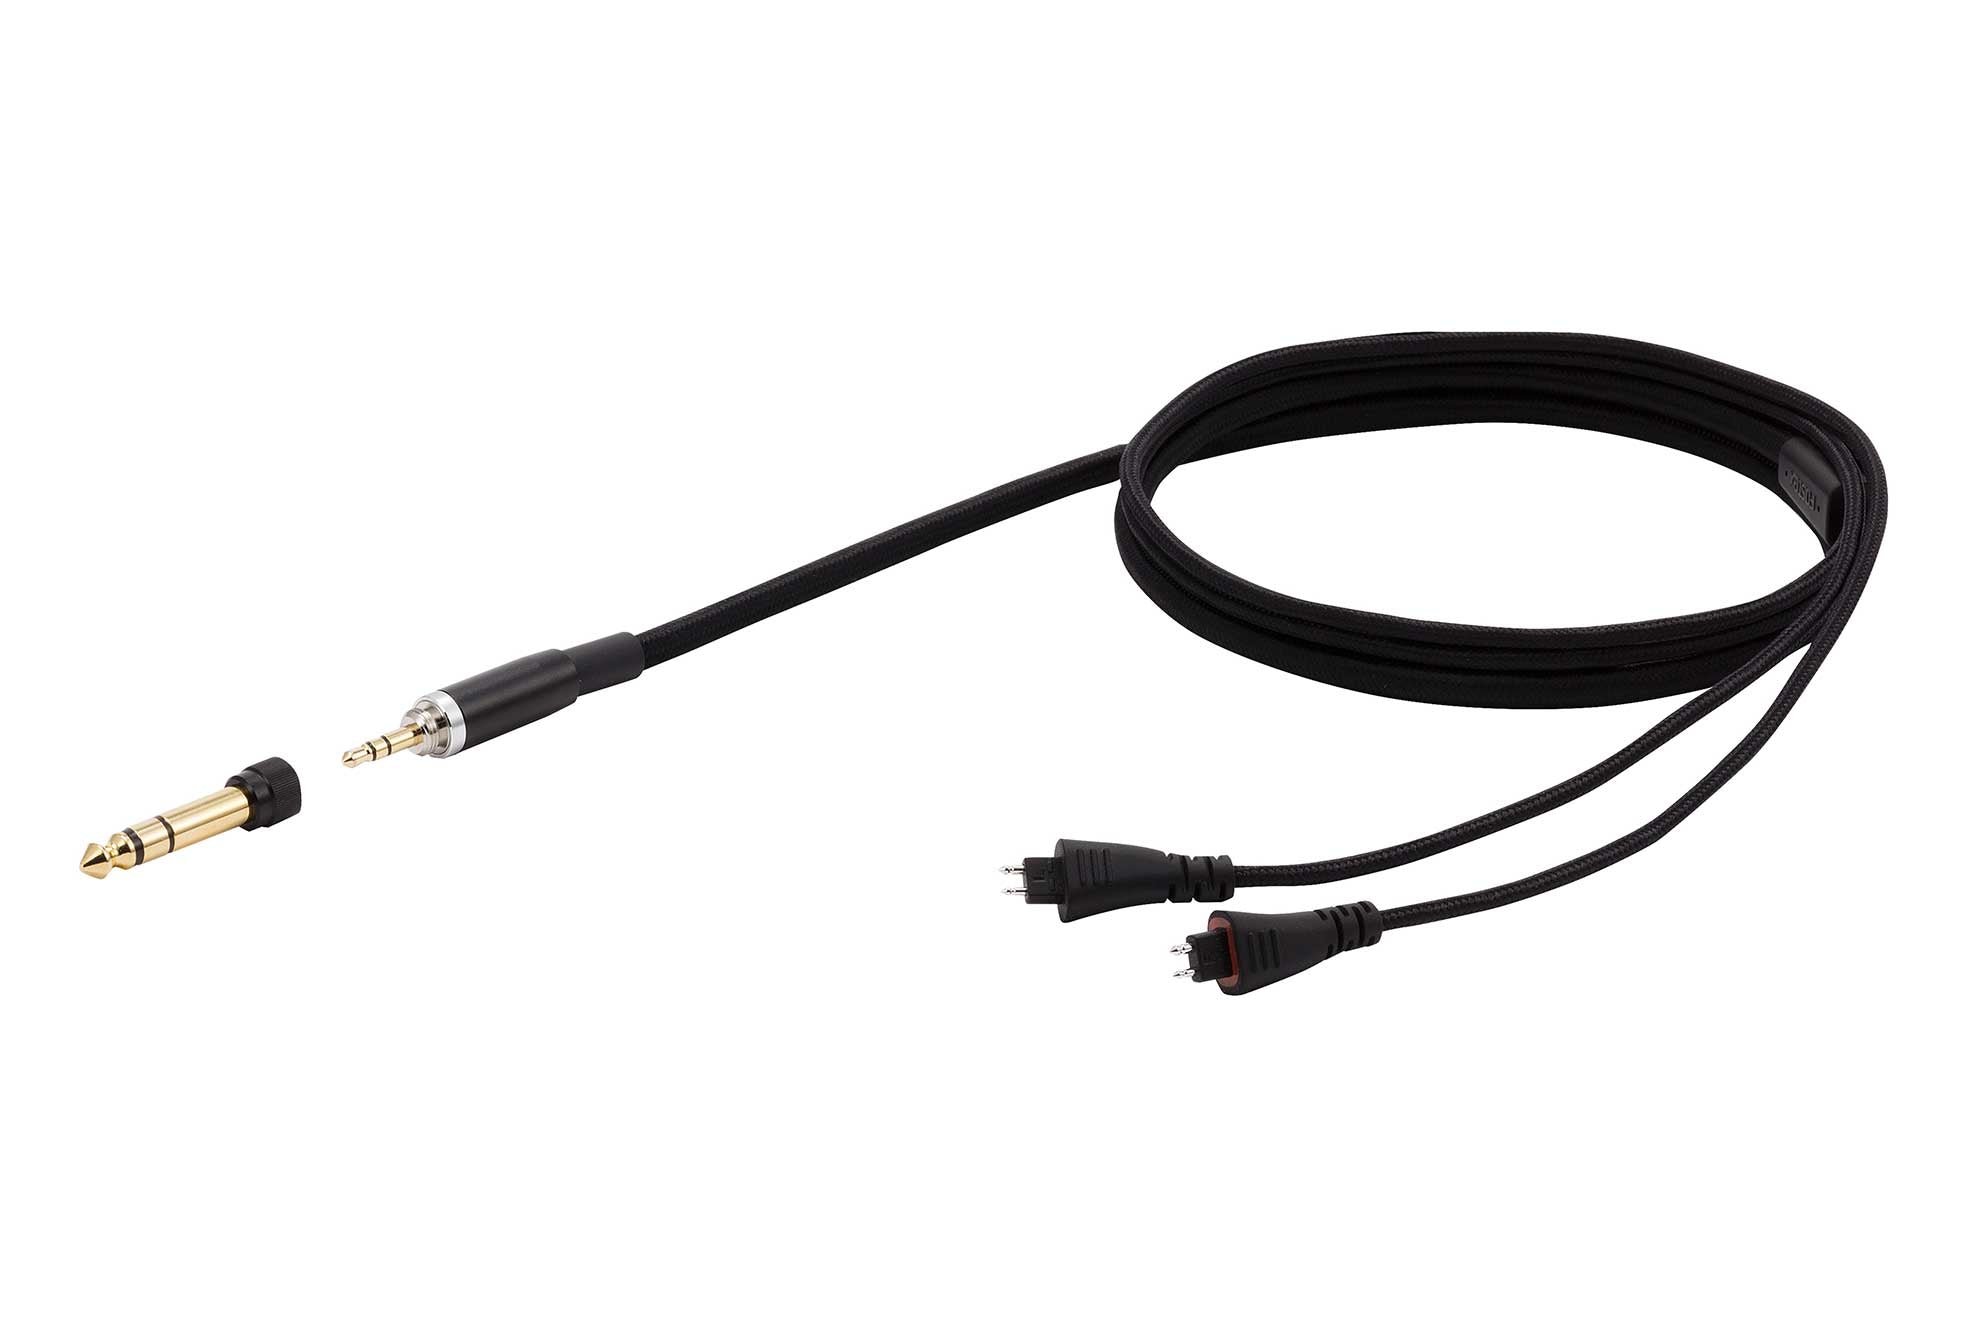 Fostex ET-H1.2N7UB - Cable for TH-909/900mk2/610, Unbalanced